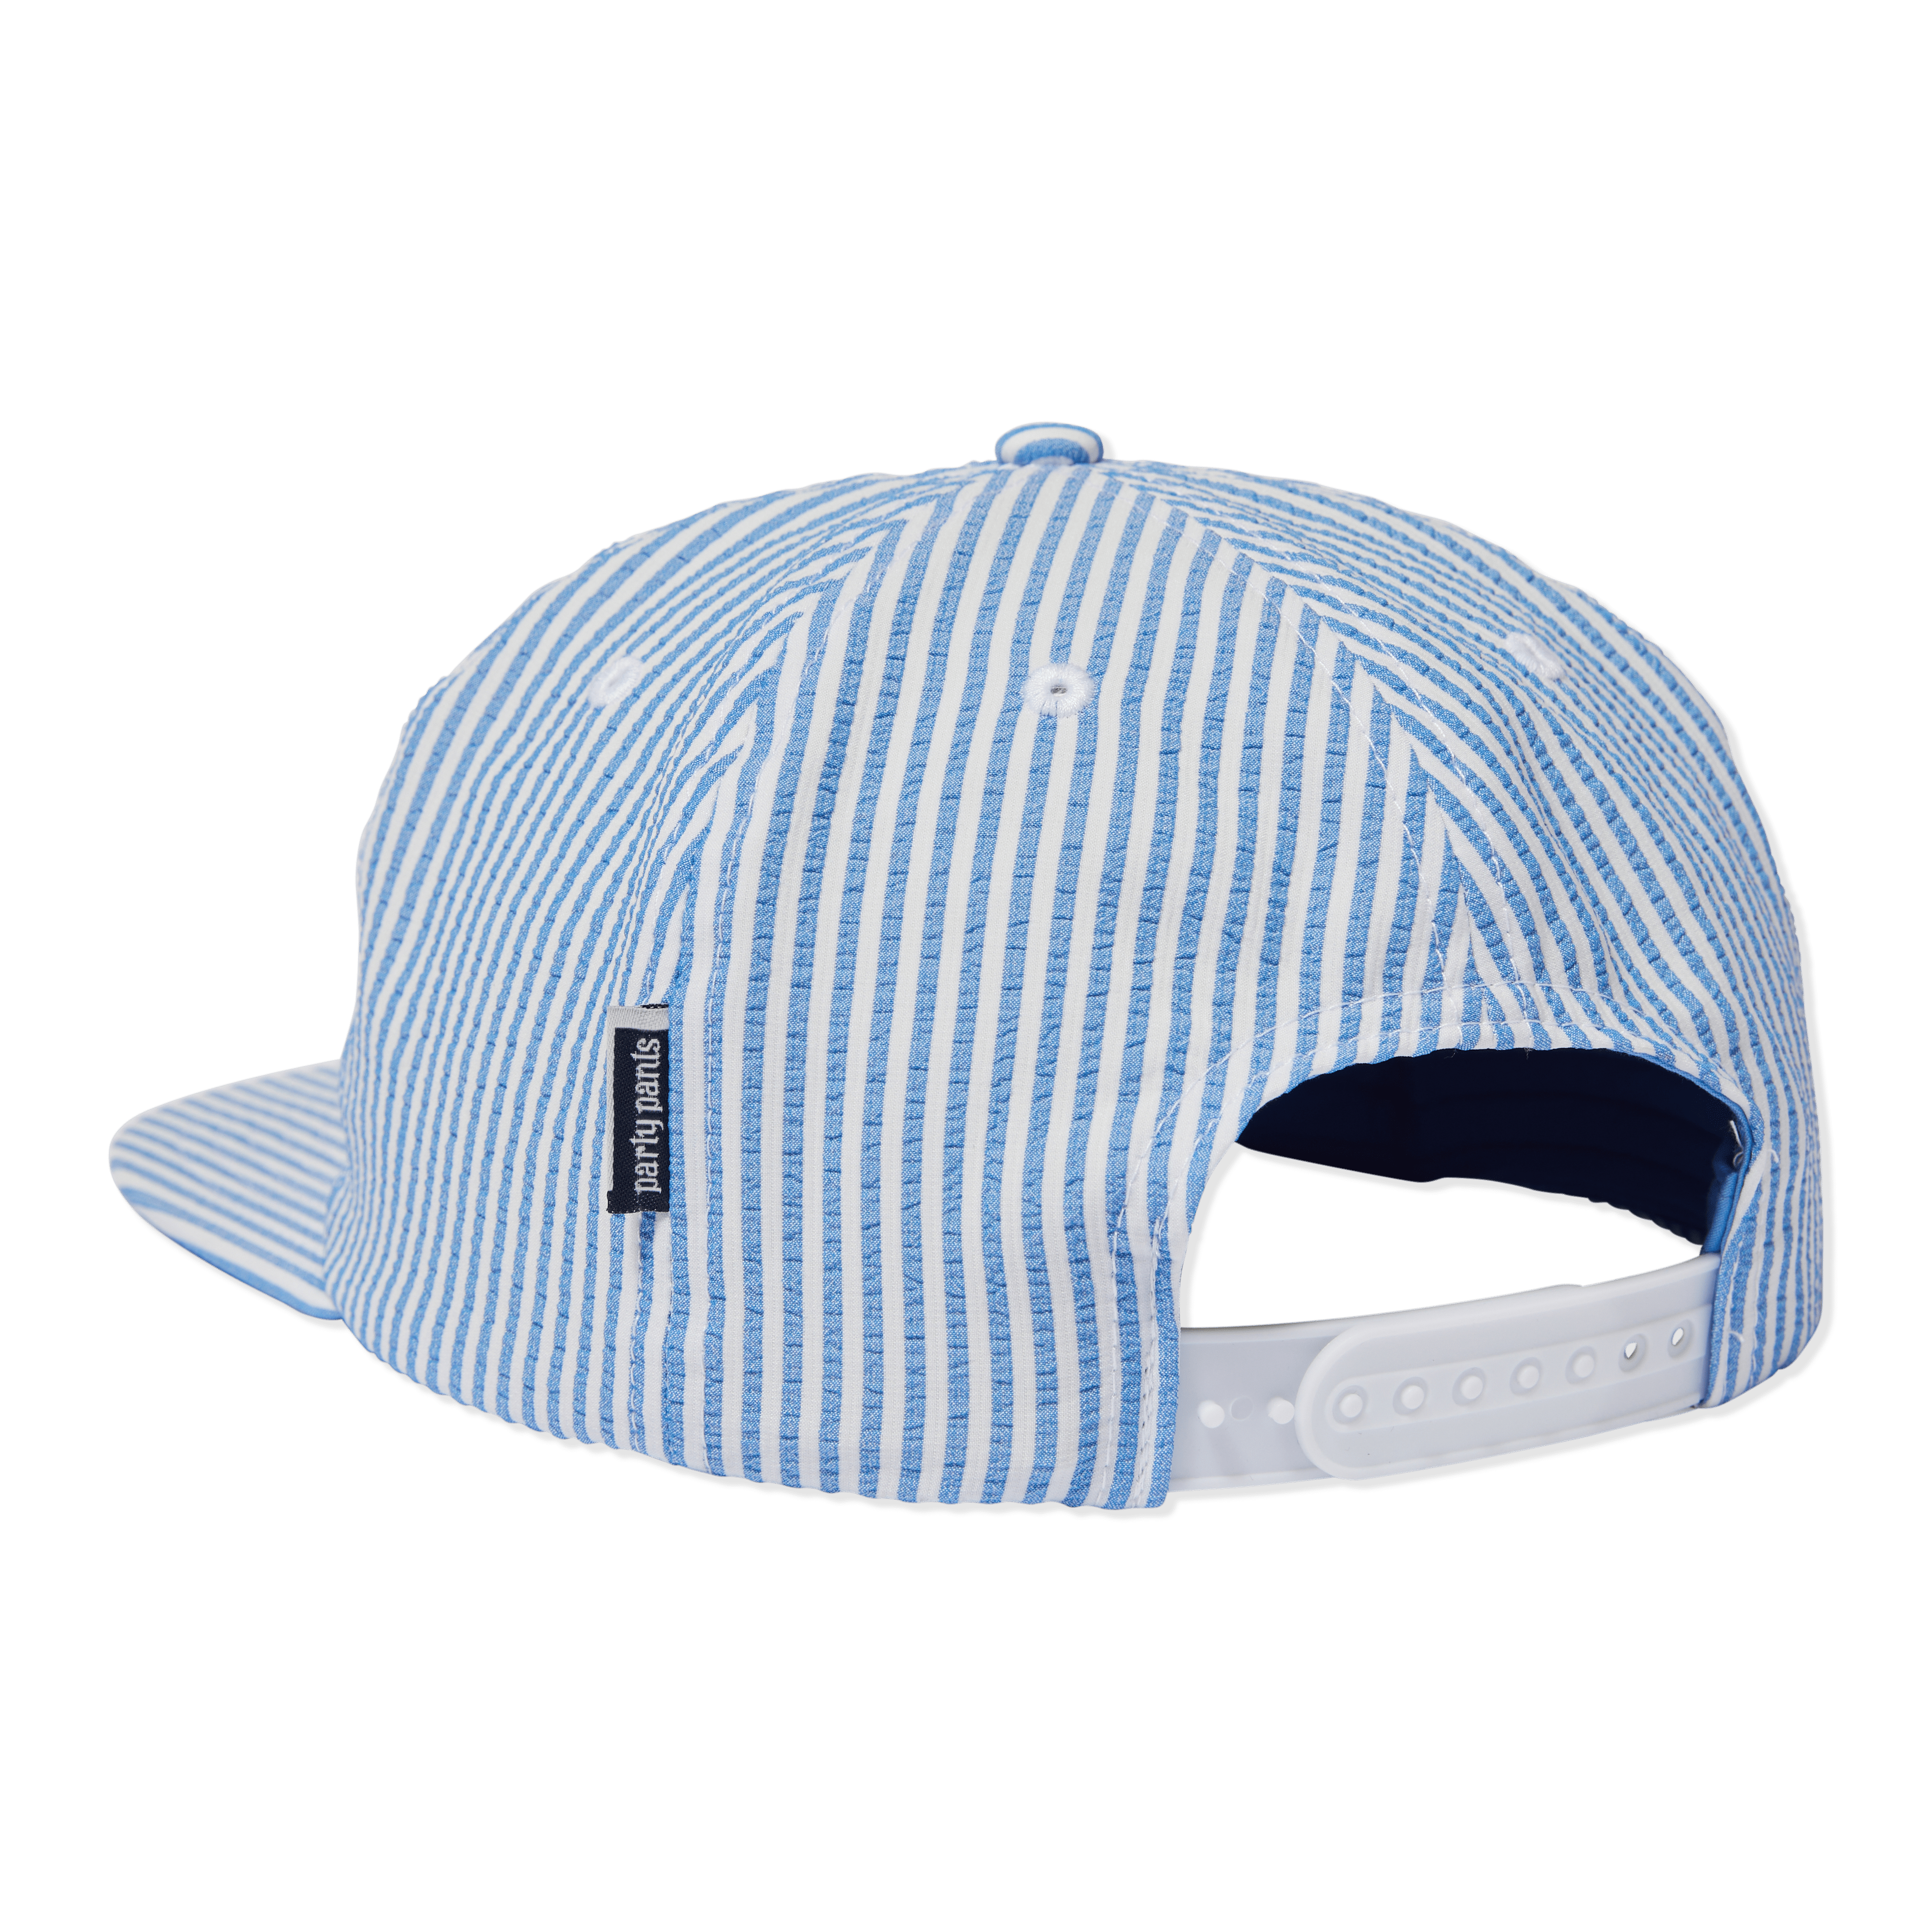 ROUNDERS CUP HAT - LIGHT BLUE HATS PARTY PANTS 